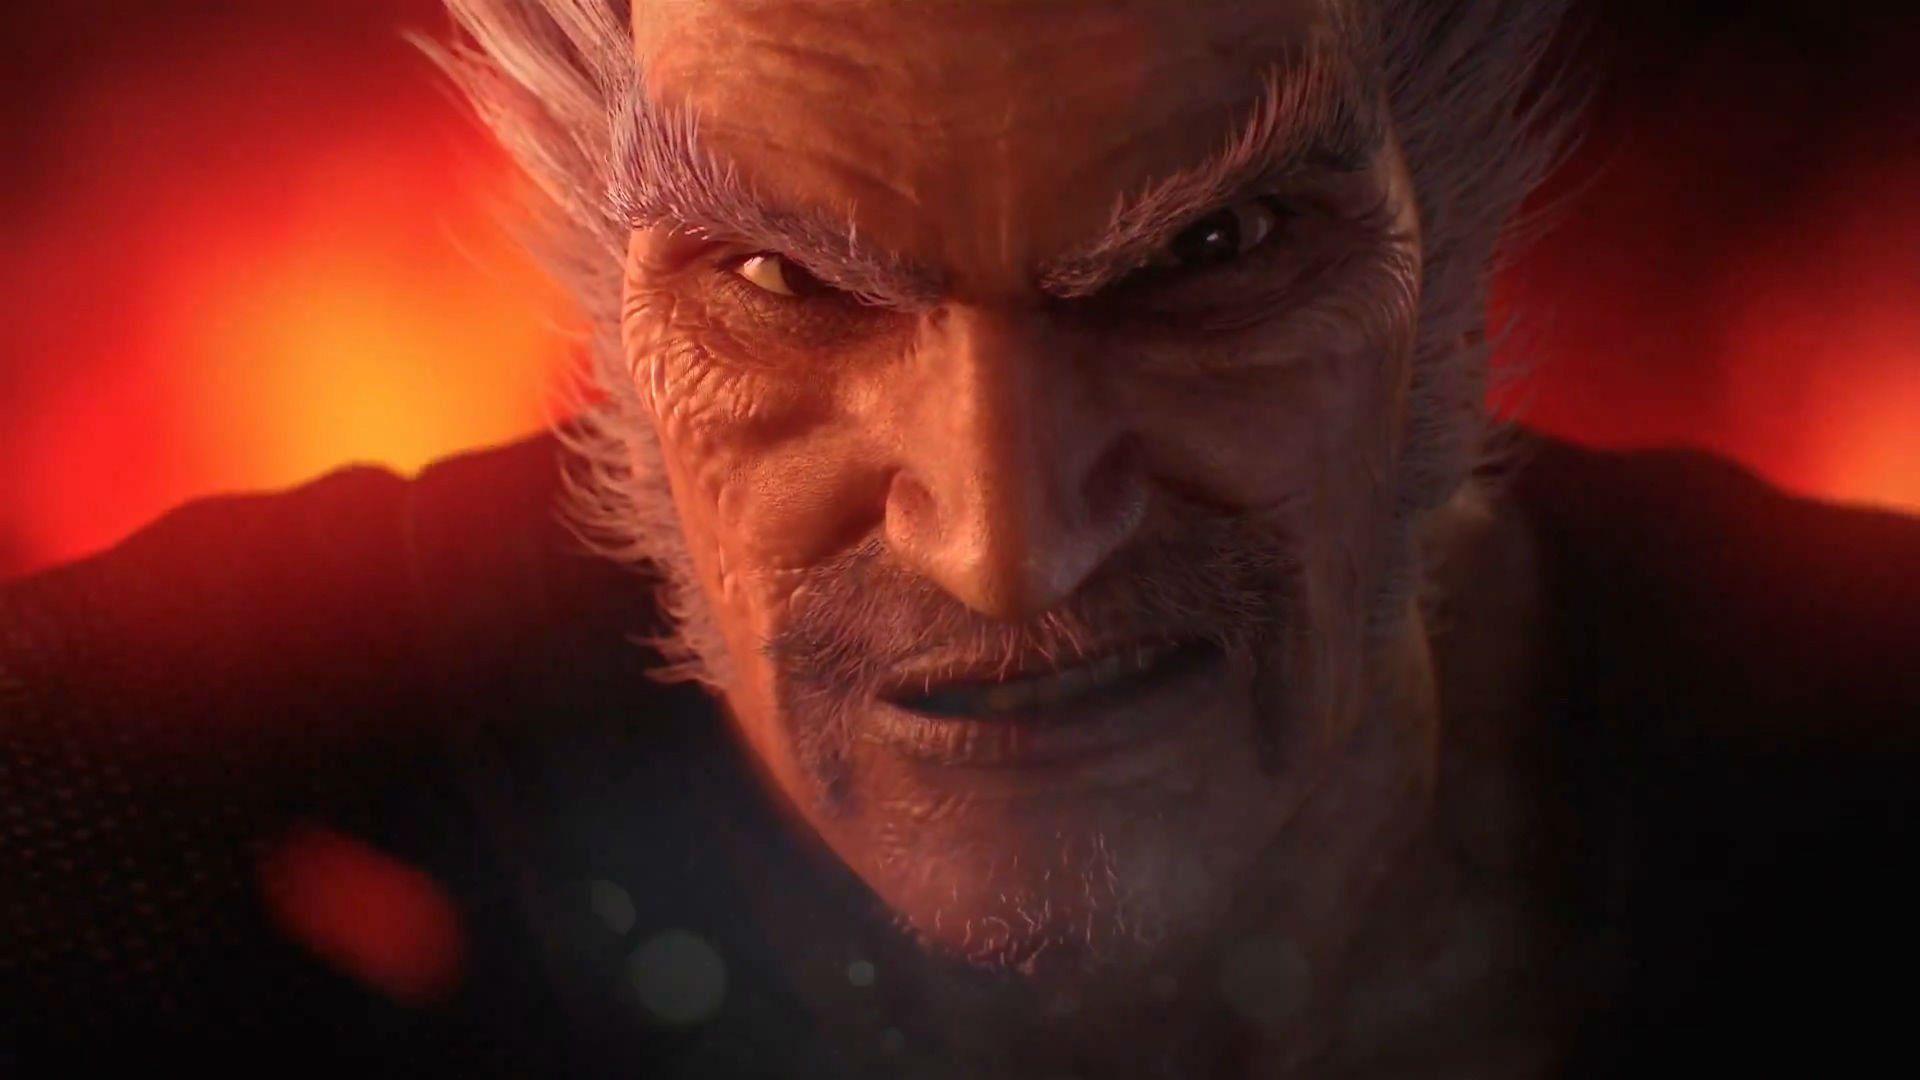 Download Tekken 7 HD Wallpaper for free games review, play